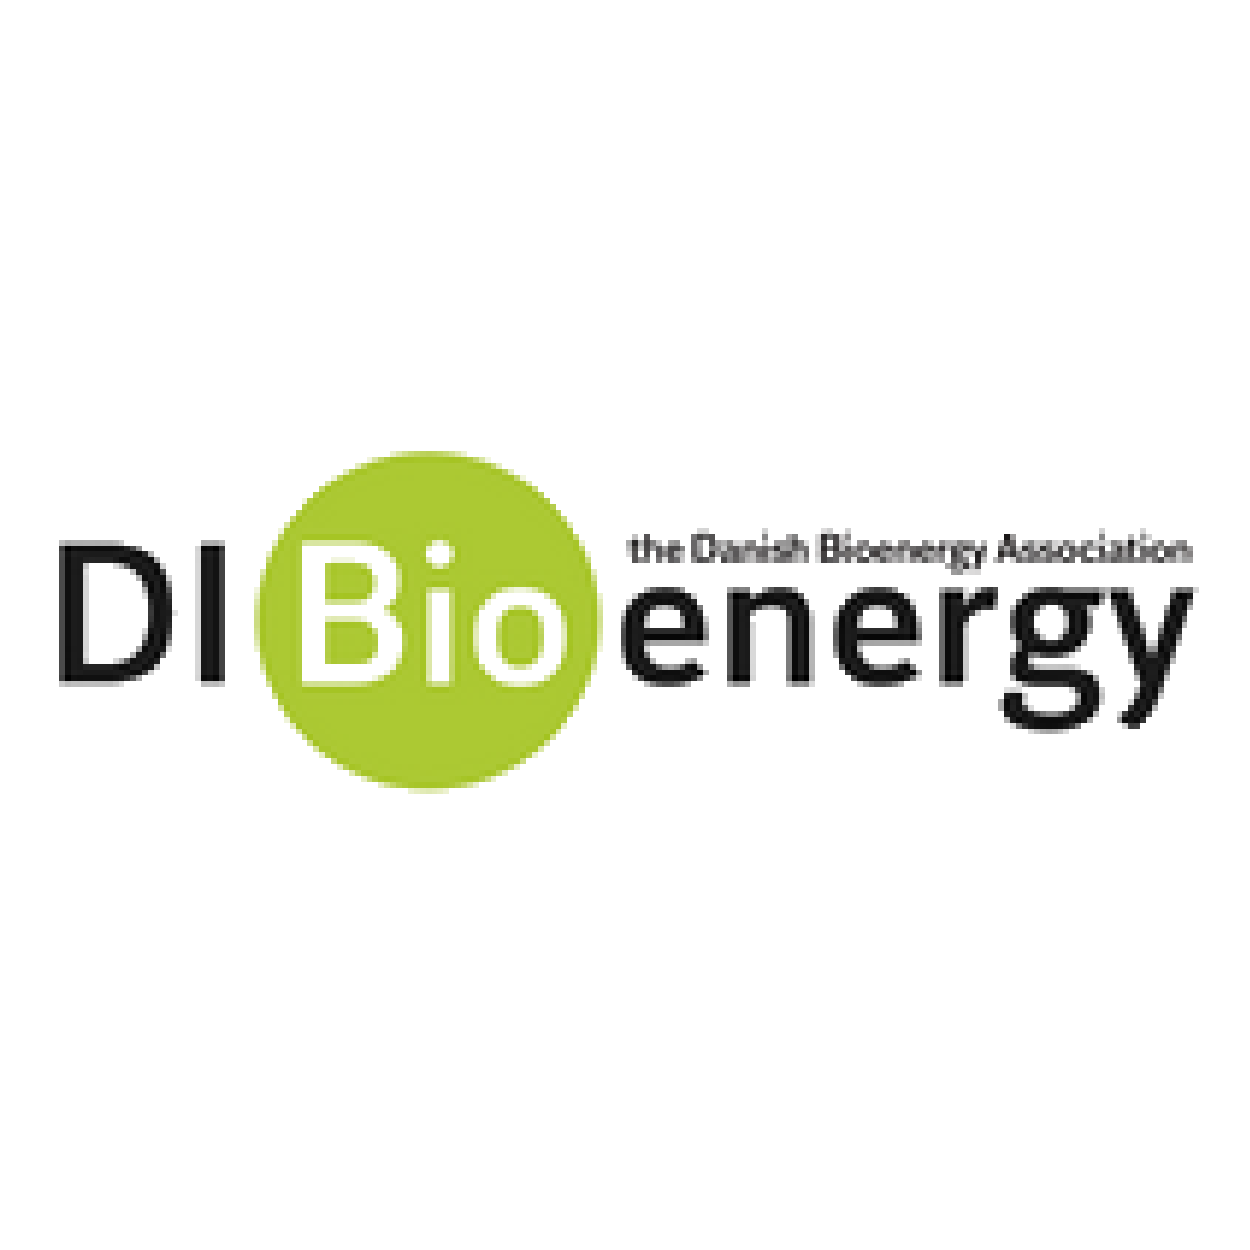 Danish Bioenergy Association (DI Bioenergi)